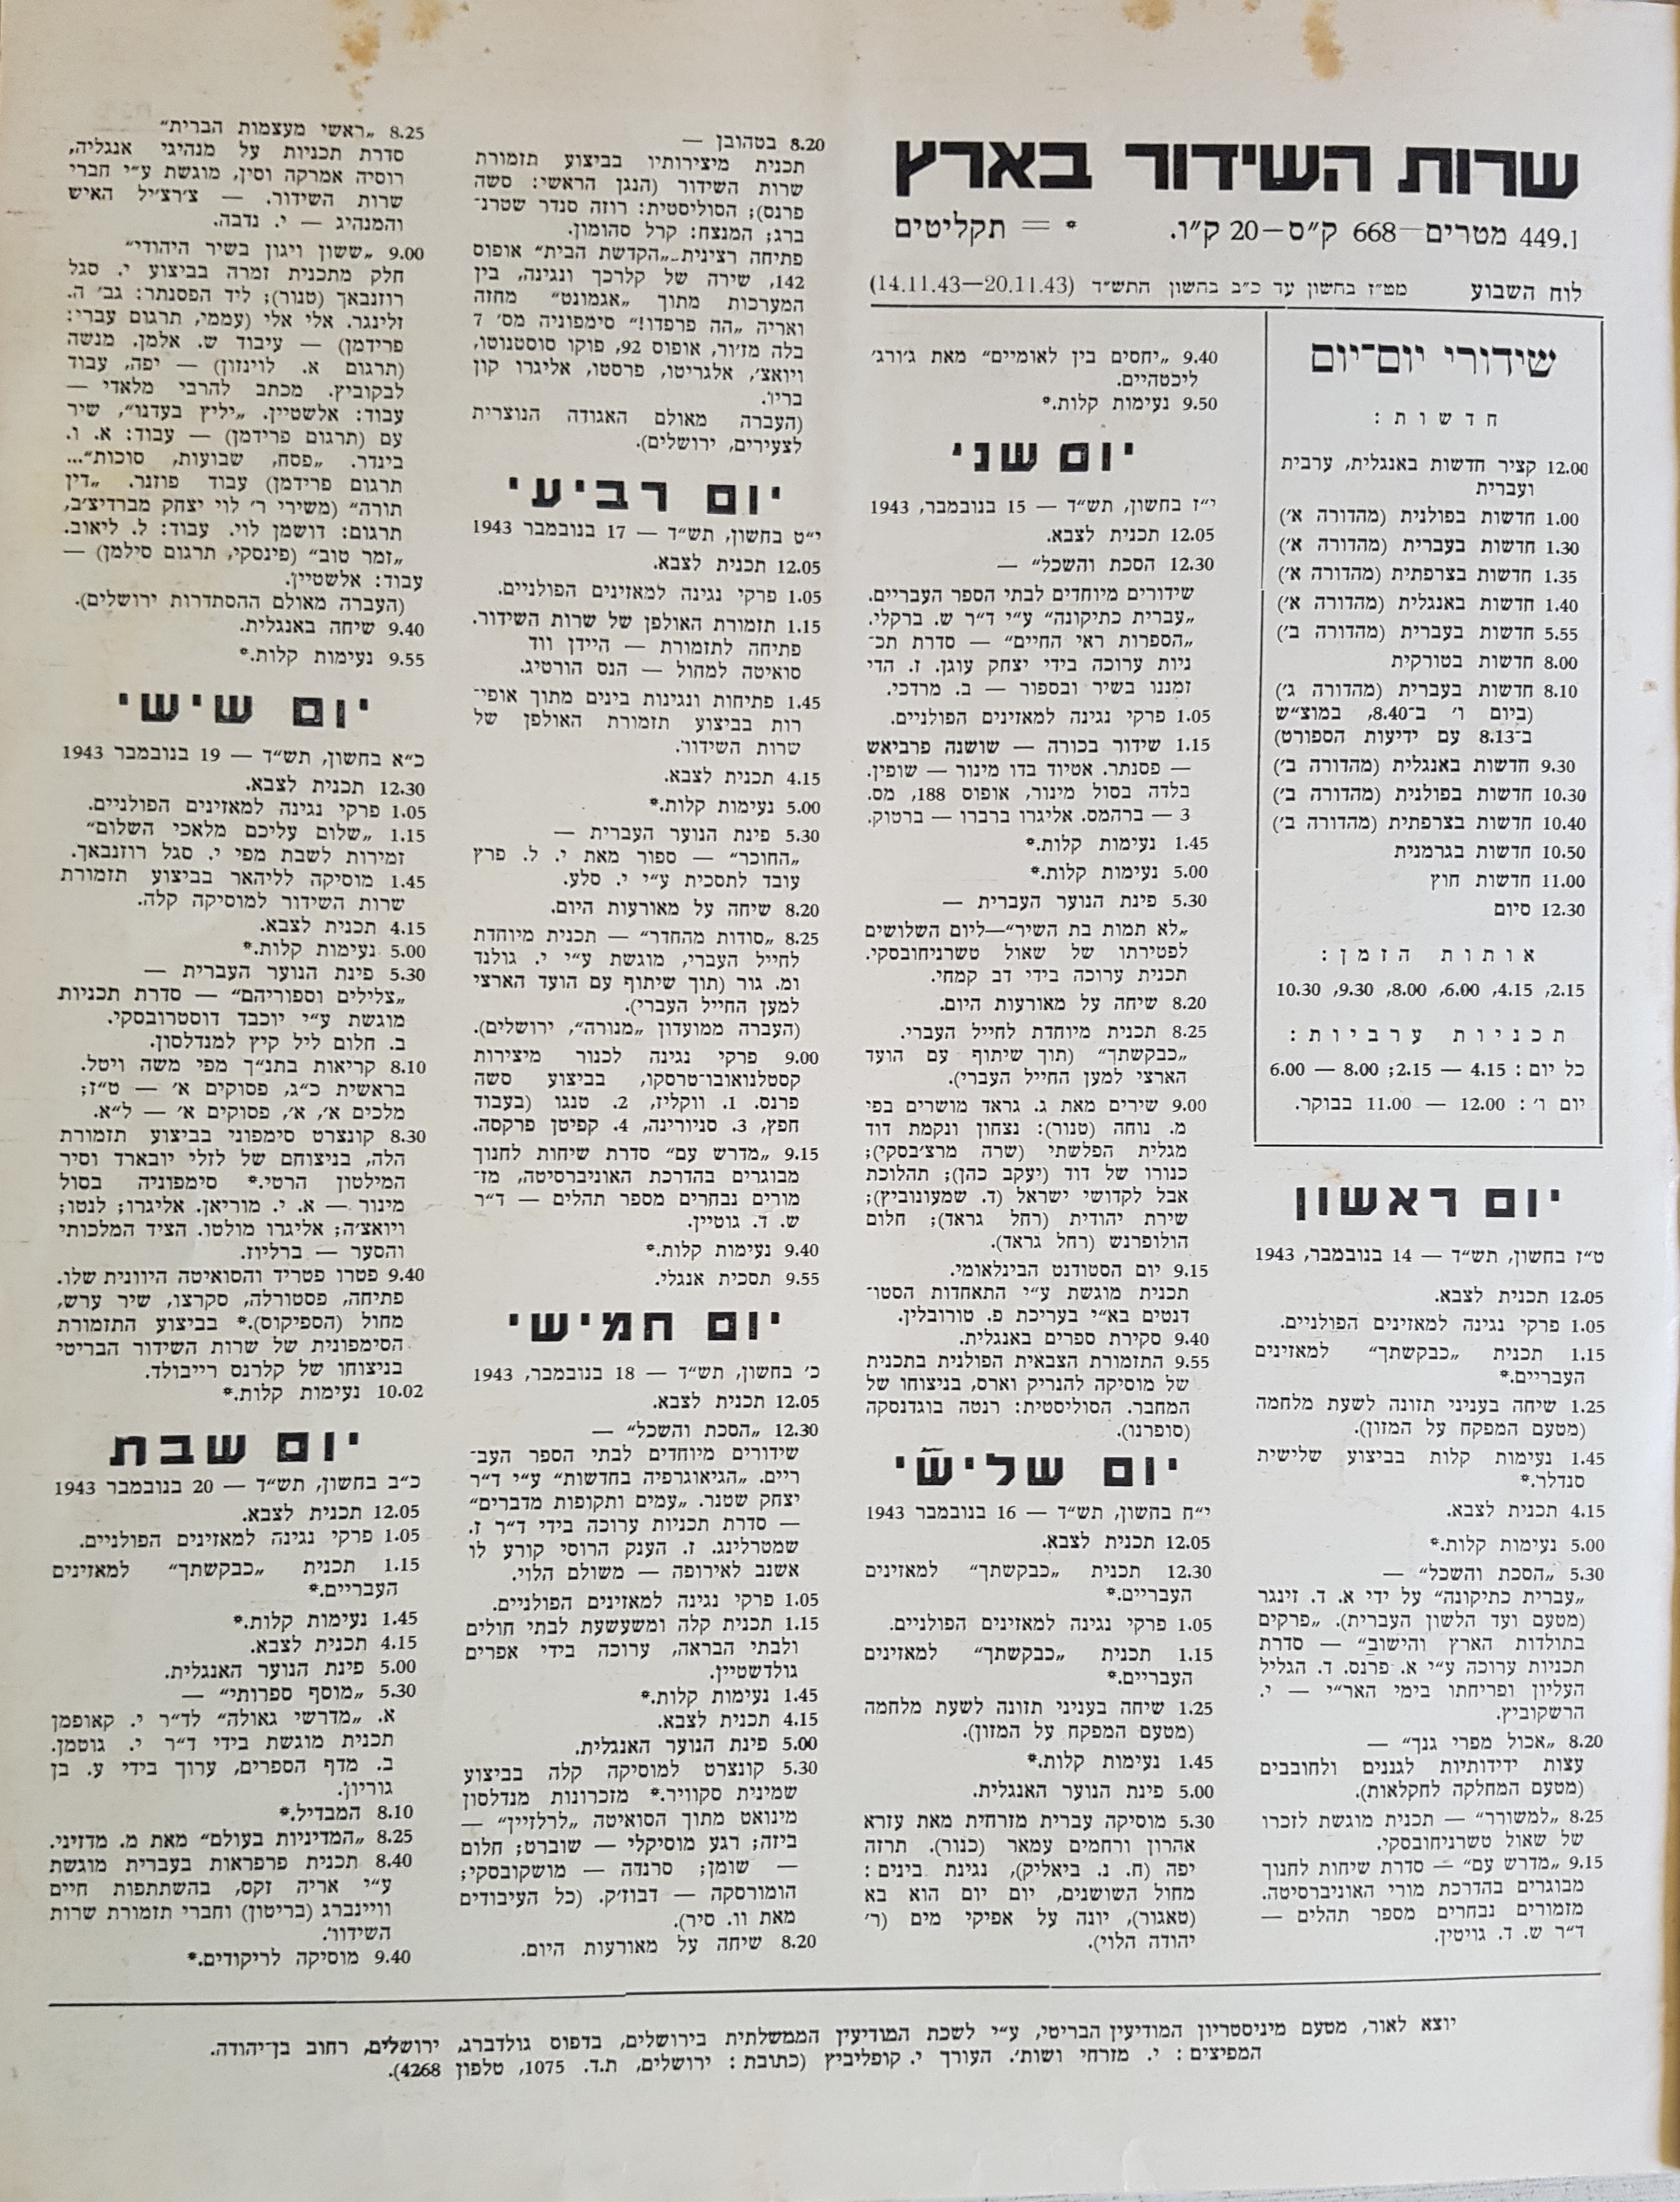 Radio Schedule: November 14, 1943 -  November 20, 1943